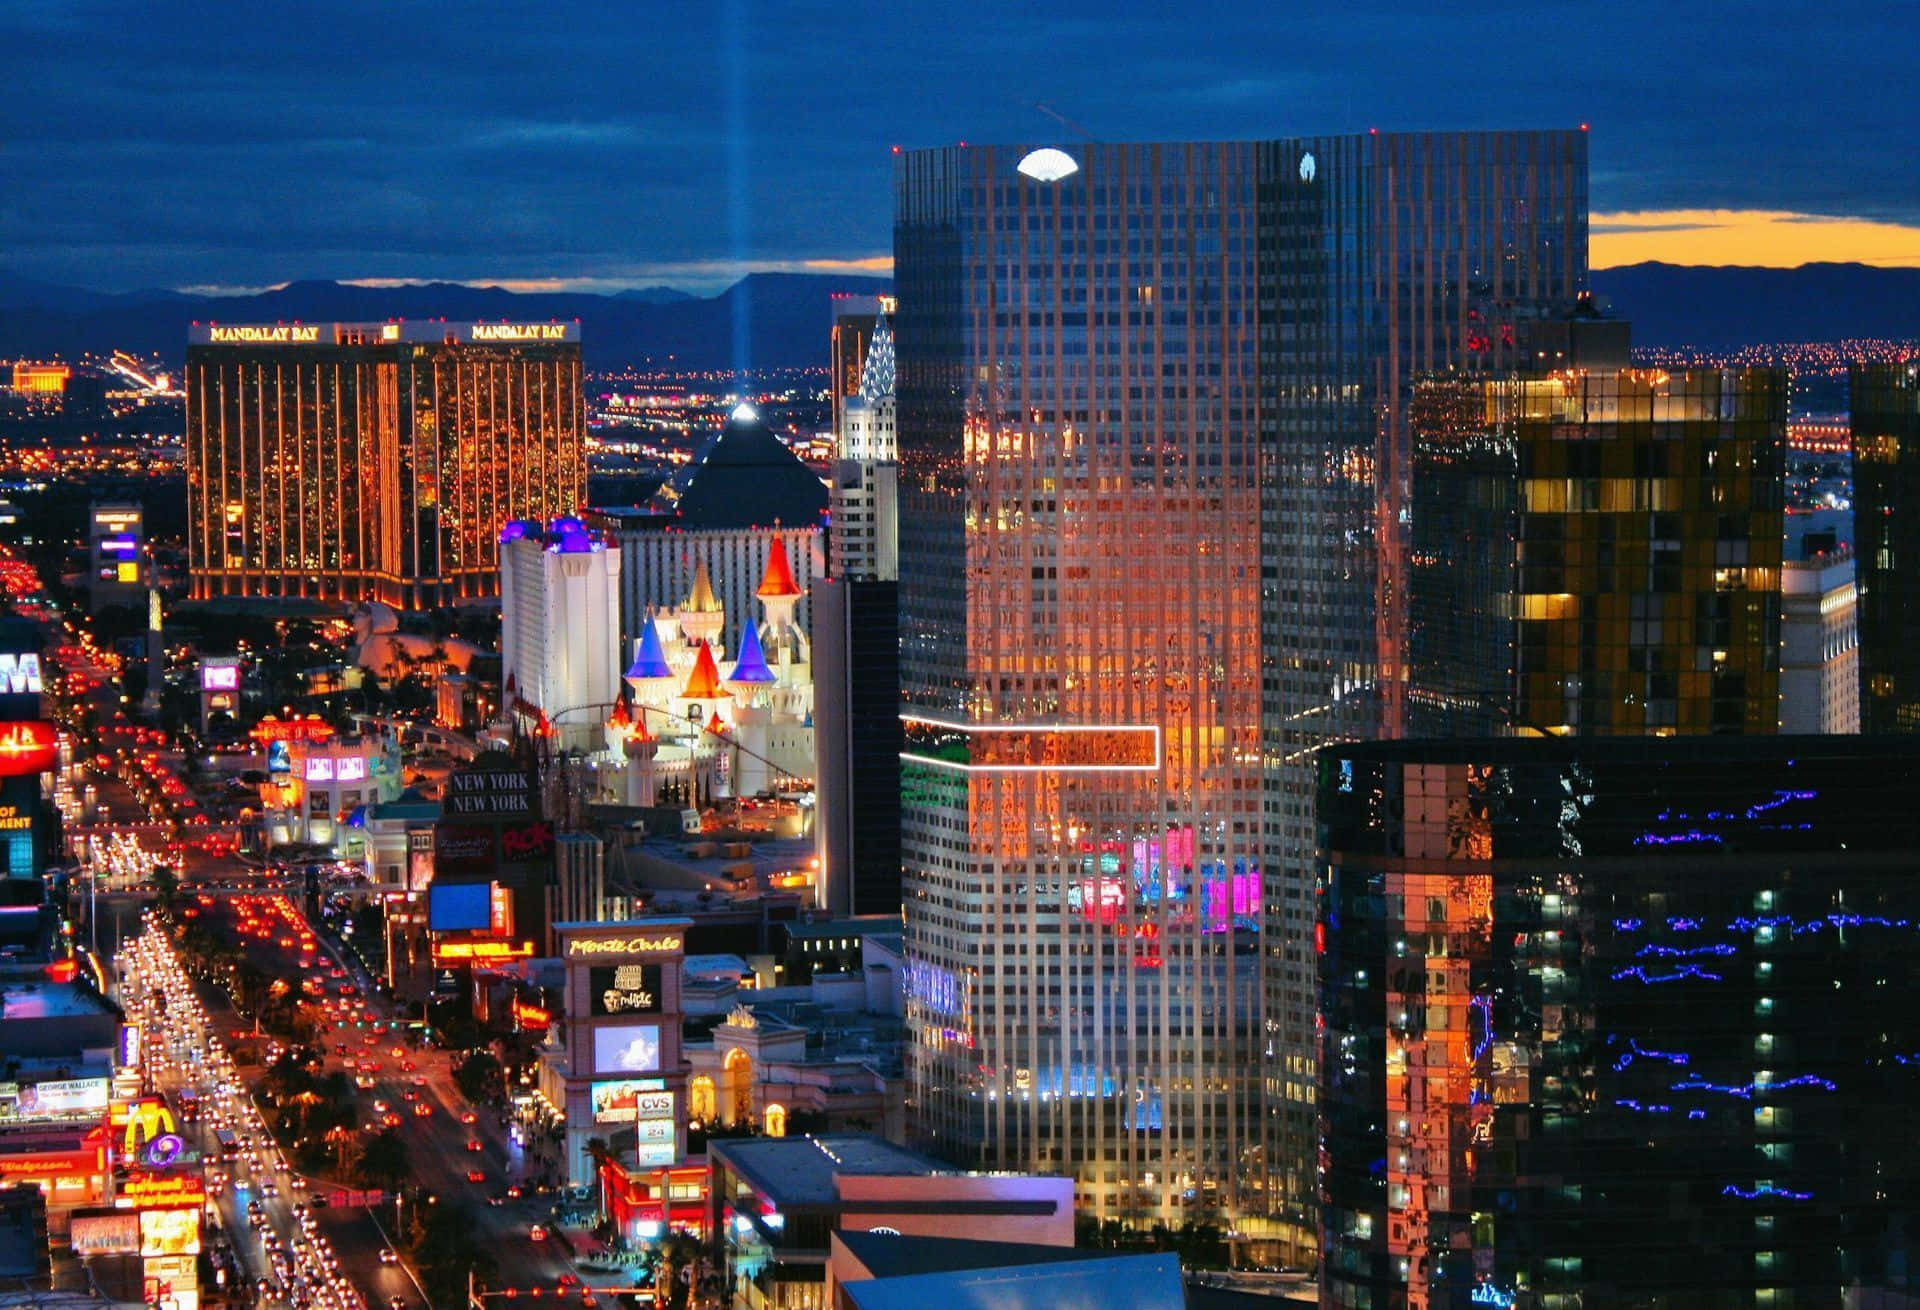 The dazzling Las Vegas skyline at night Wallpaper